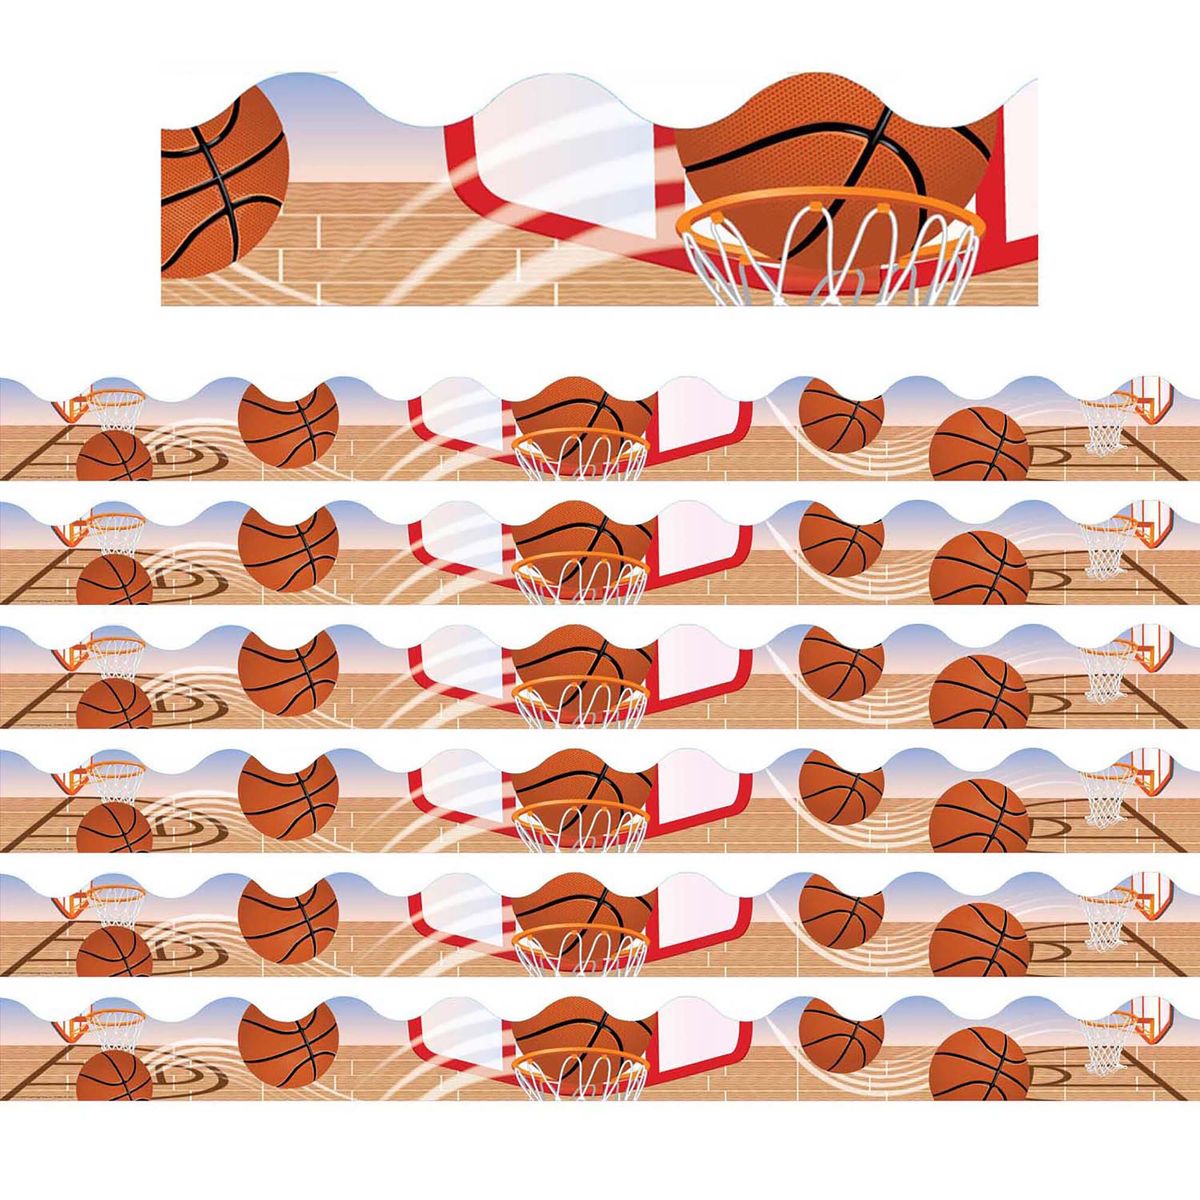 [RDY] [送料無料] Eureka バスケットボール デコトリム 72個セット [楽天海外通販] | Eureka Basketball Deco Trim, 72 Pieces